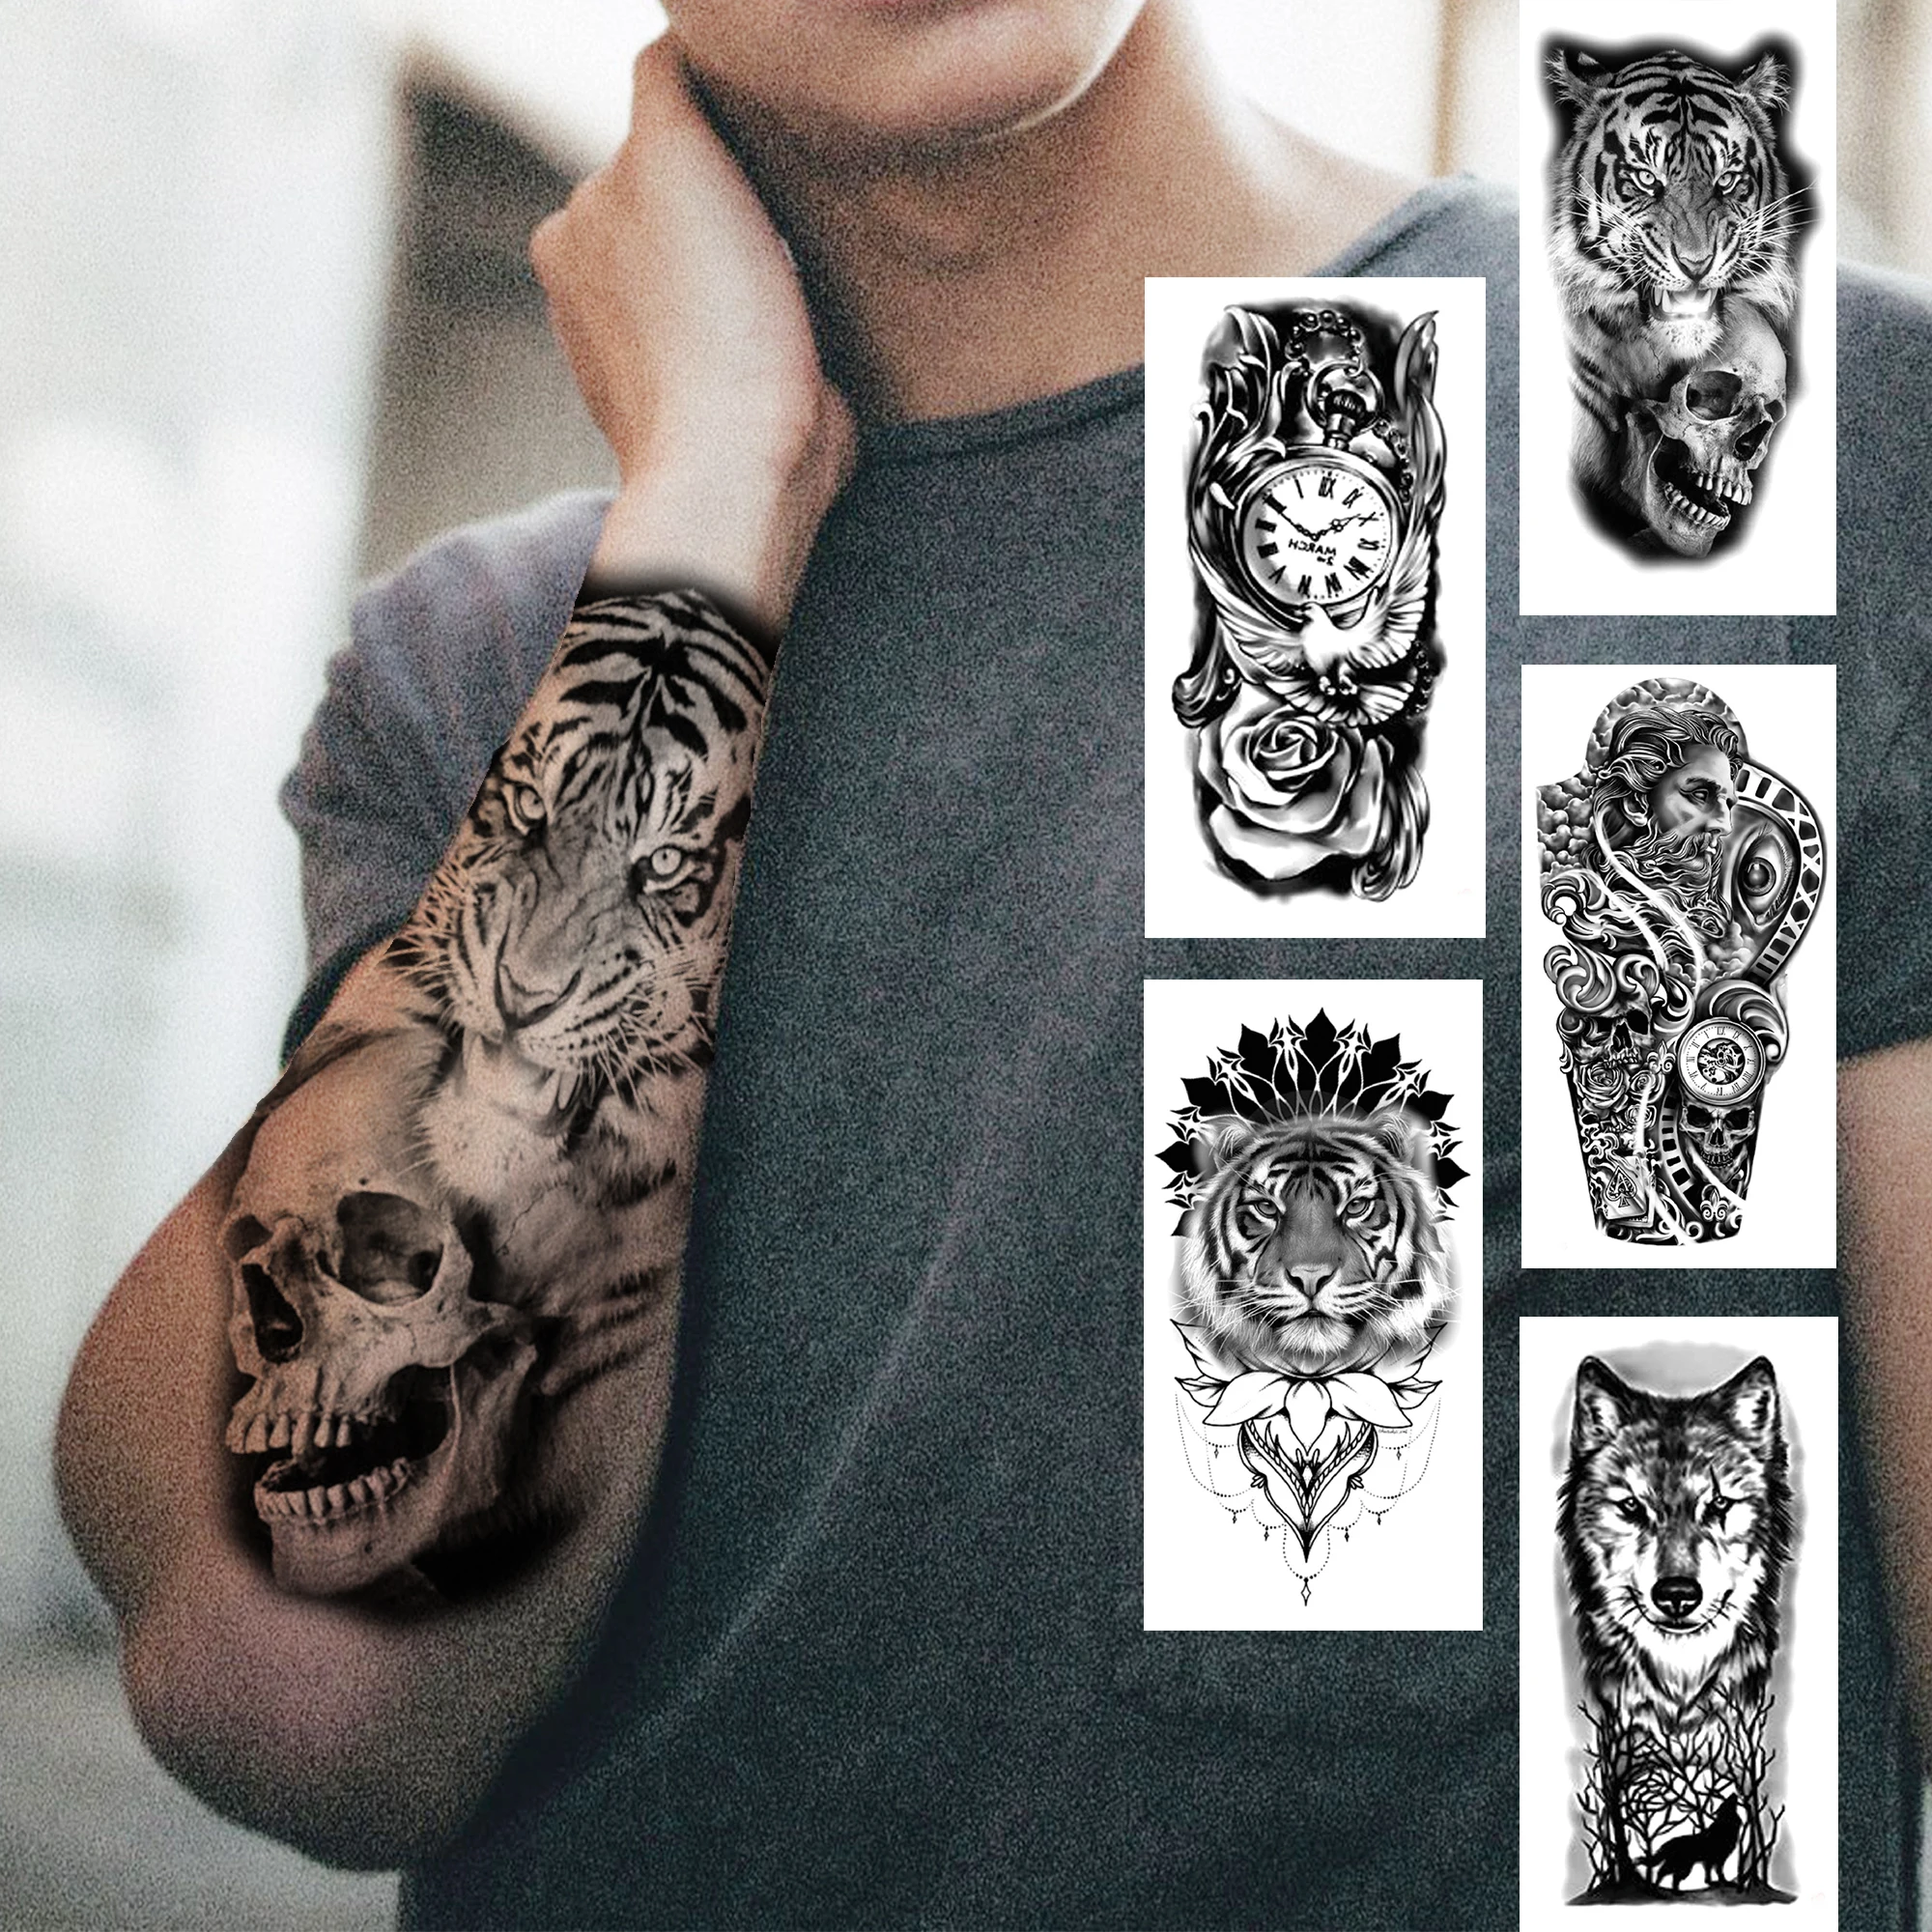 

Death Skull Tiger Temporary Tattoo For Men Women Adult Black Wolf Flower Tattoos Sticker Fake Tribal Clock Forest Tatoos Paste